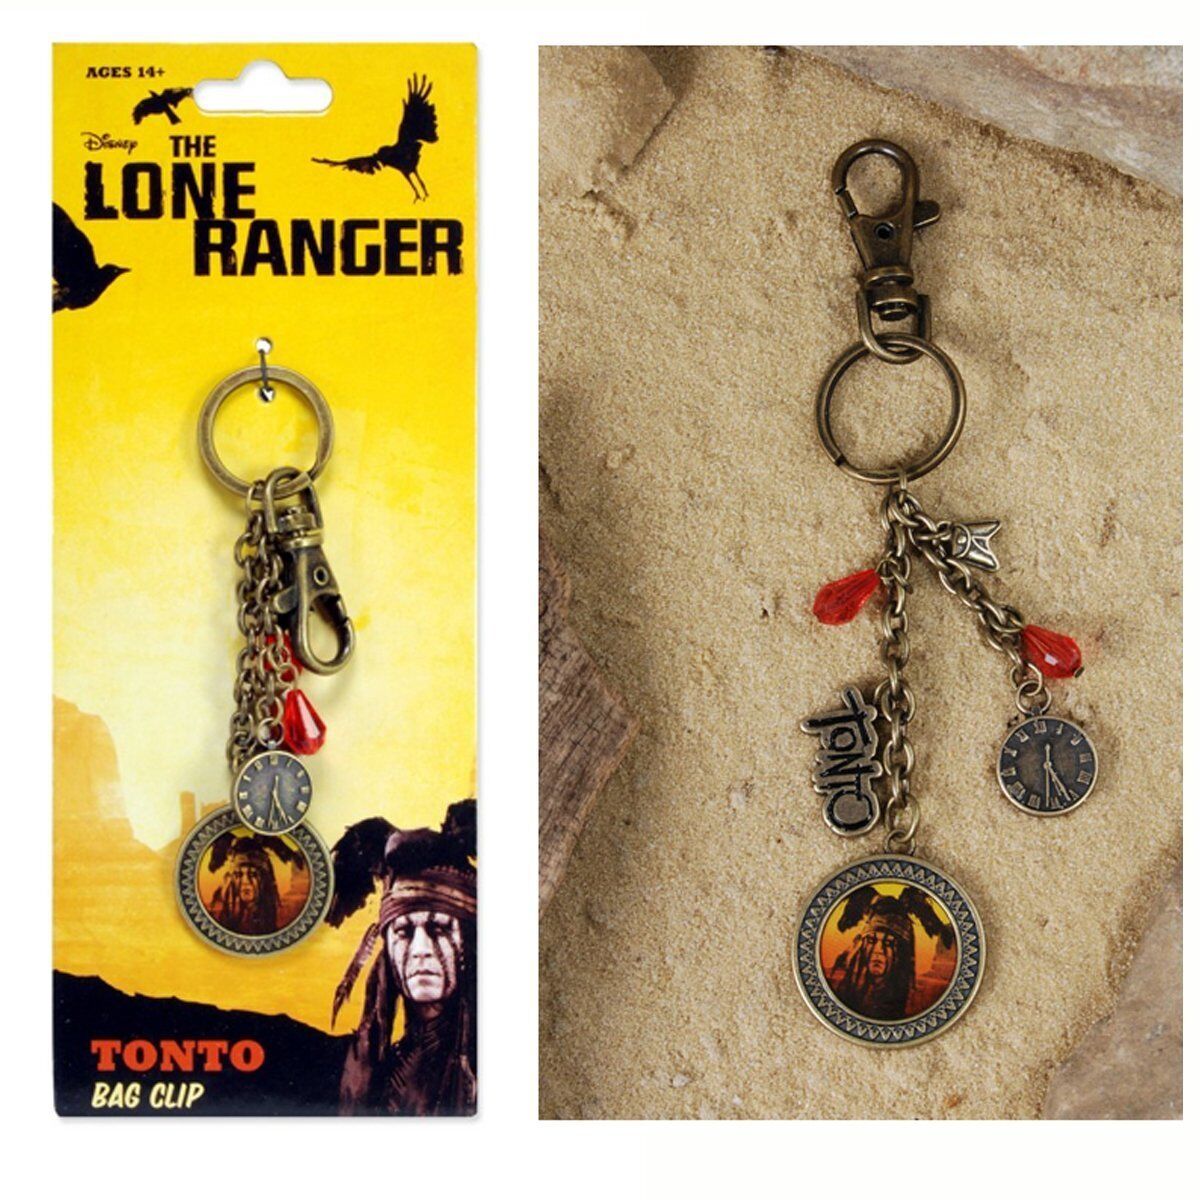 The Lone Ranger Tonto Bag Clip NEW Toys NECA Charm Johnny Depp Movie